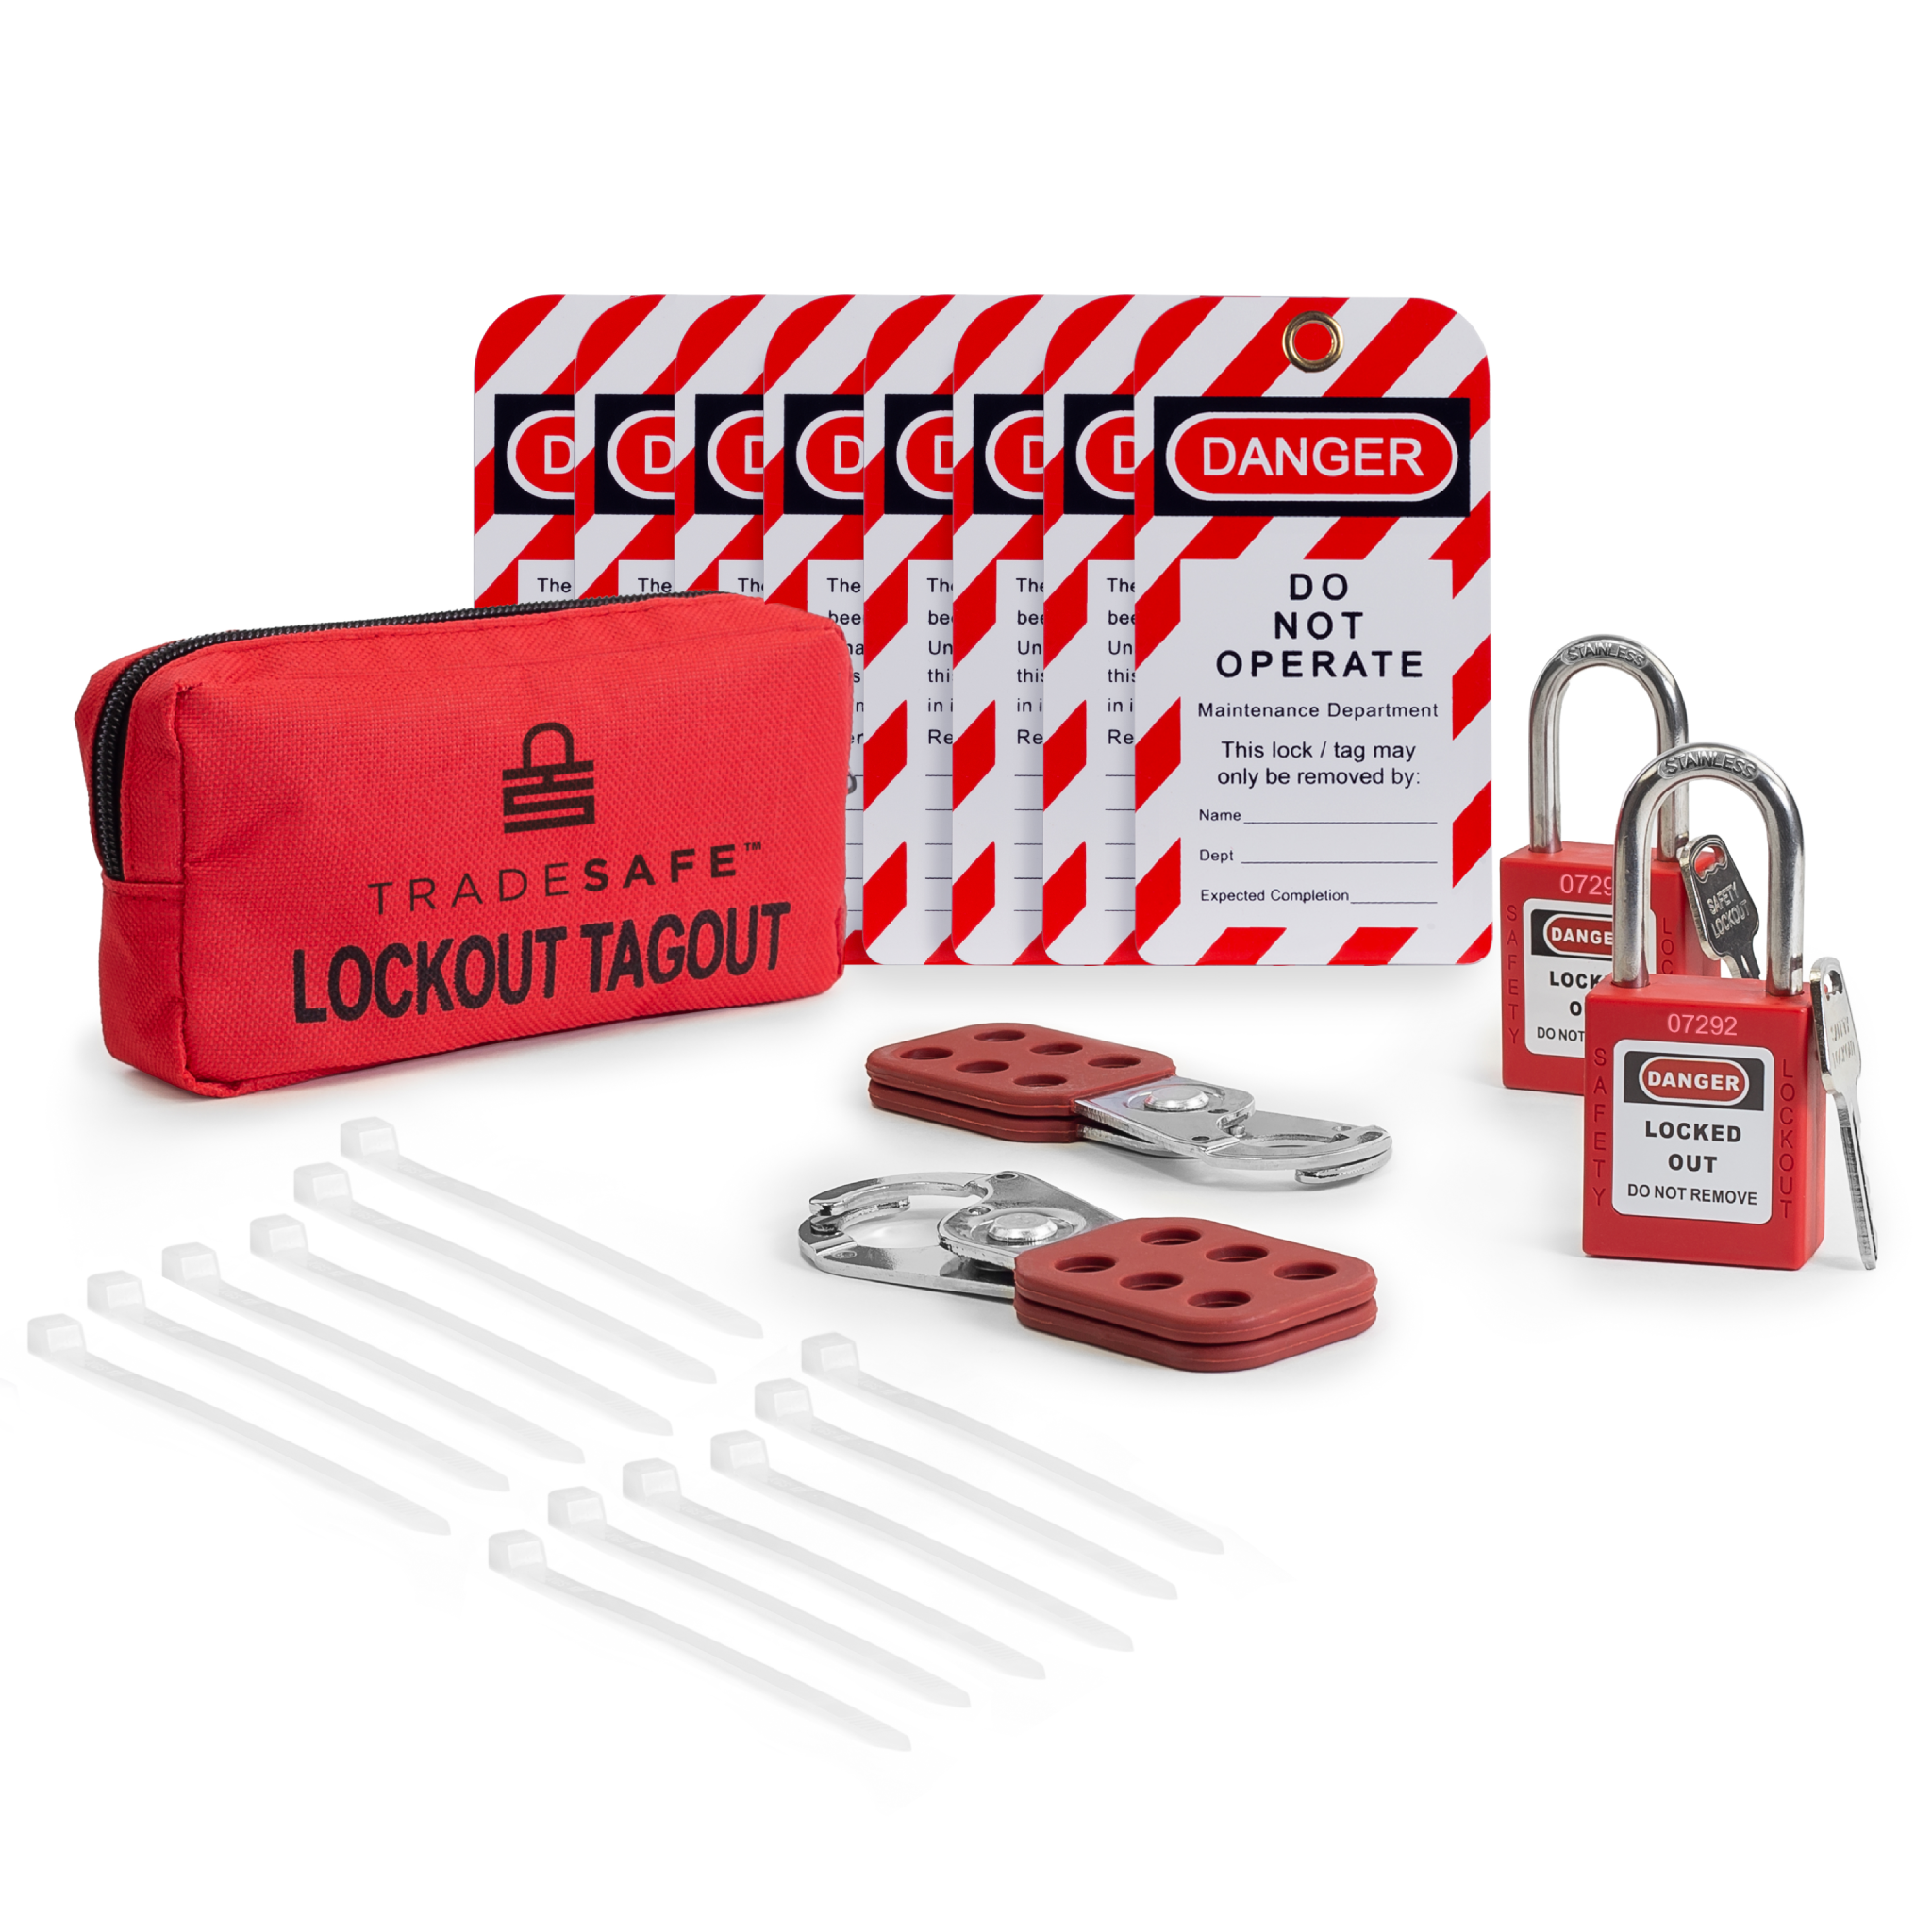 Personal Lockout Tagout Kit – 1 Key Per Lock